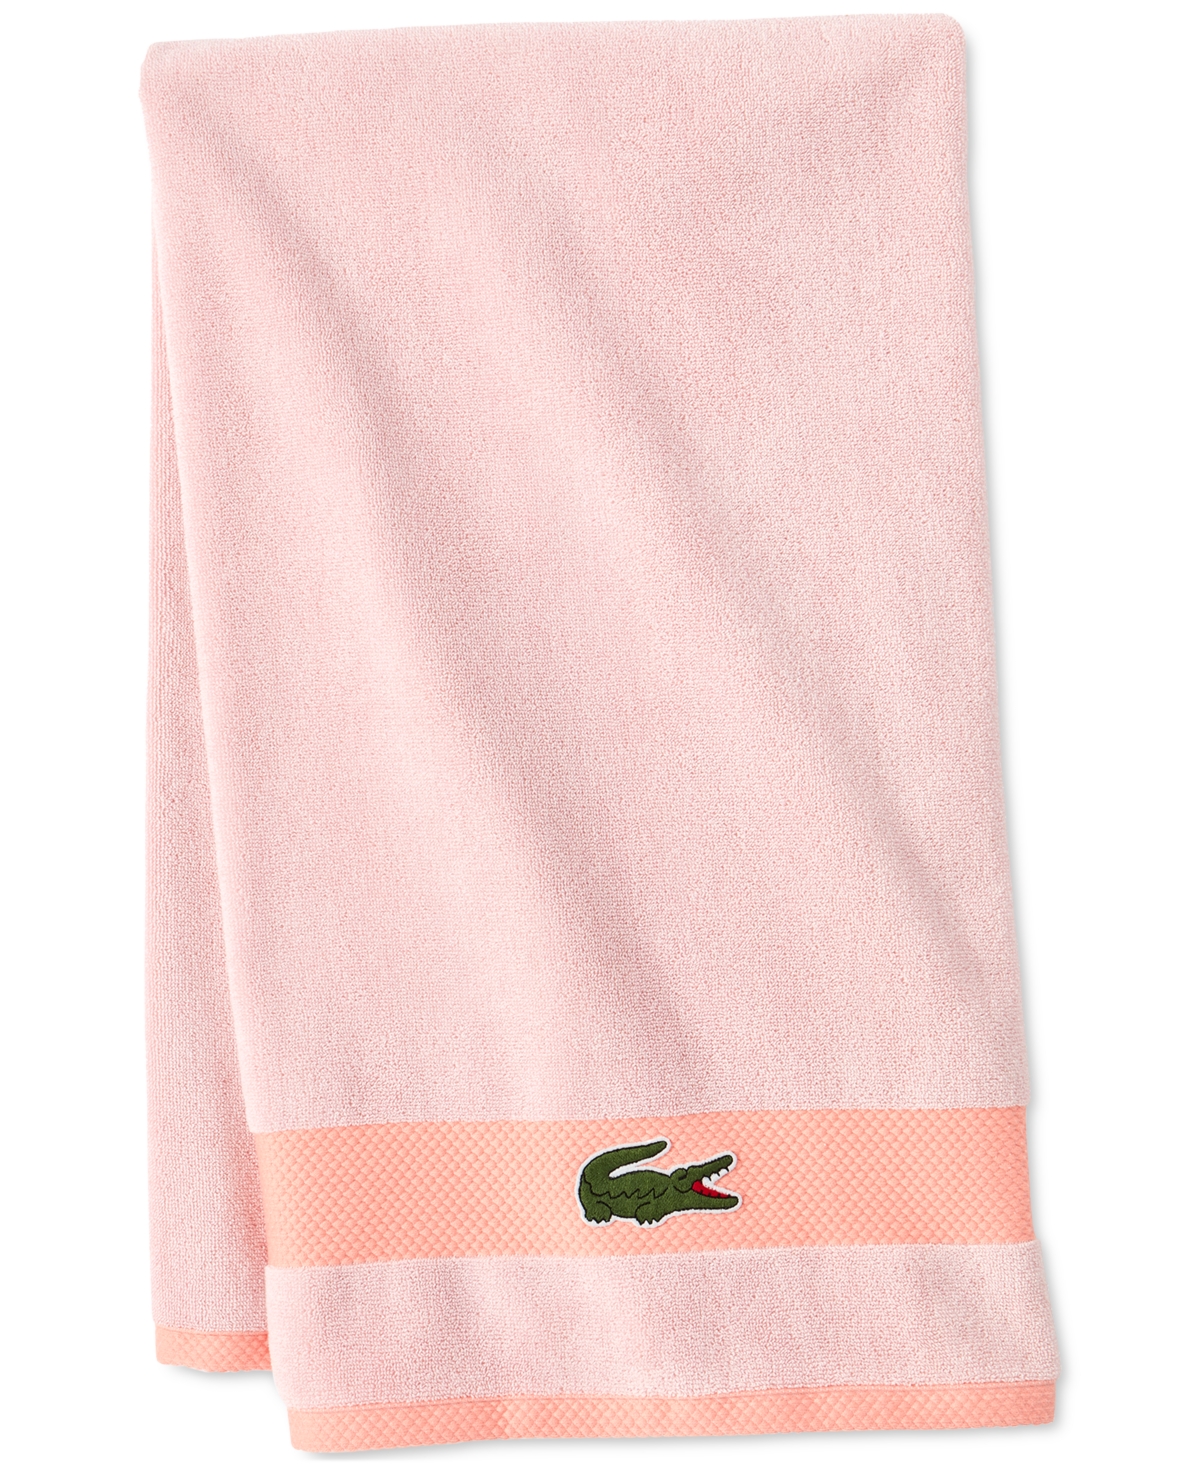 Lacoste Home Heritage Anti-microbial Supima Cotton Bath Towel, 30